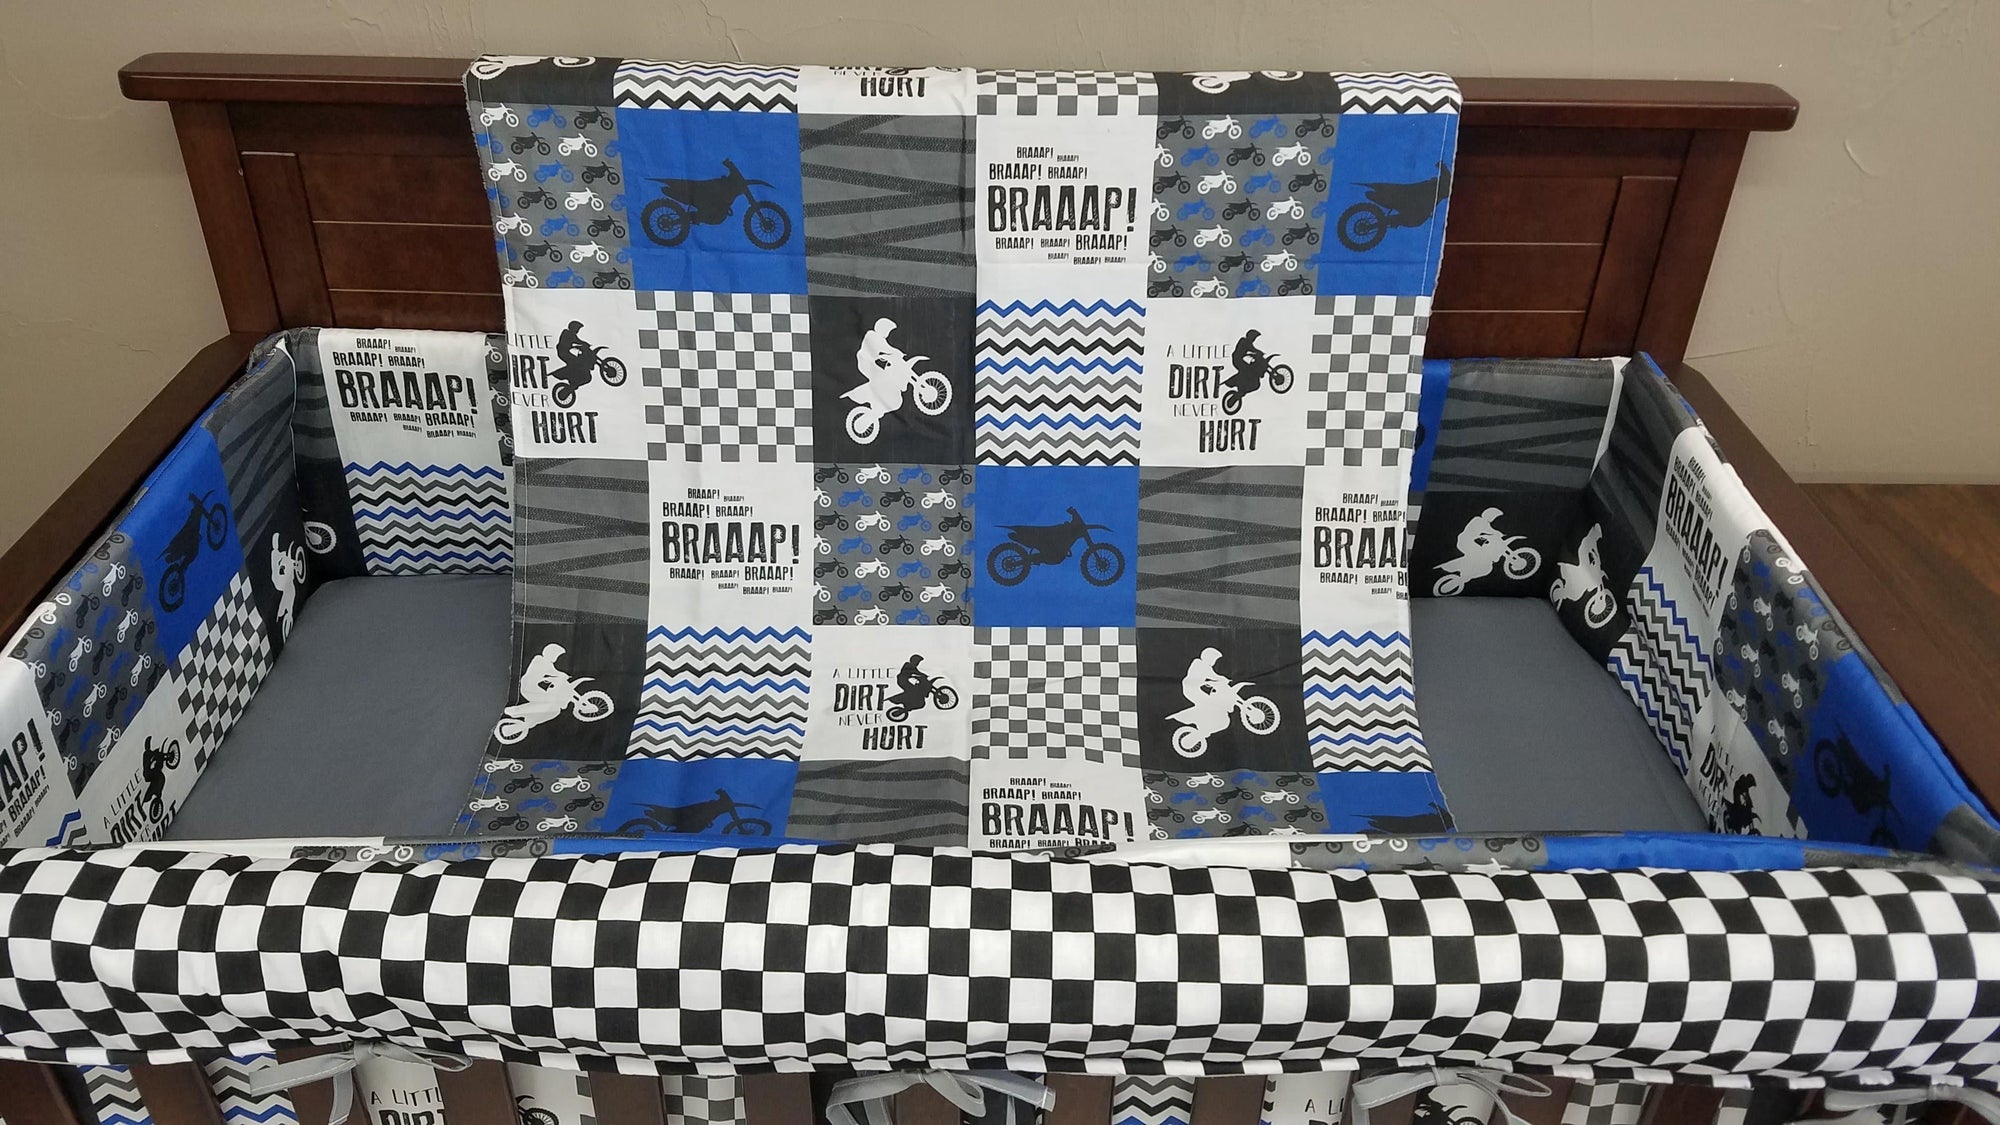 Custom Boy Crib Bedding - Dirt Bike, Race Flag Check, Motocross Baby Bedding Collection - DBC Baby Bedding Co 